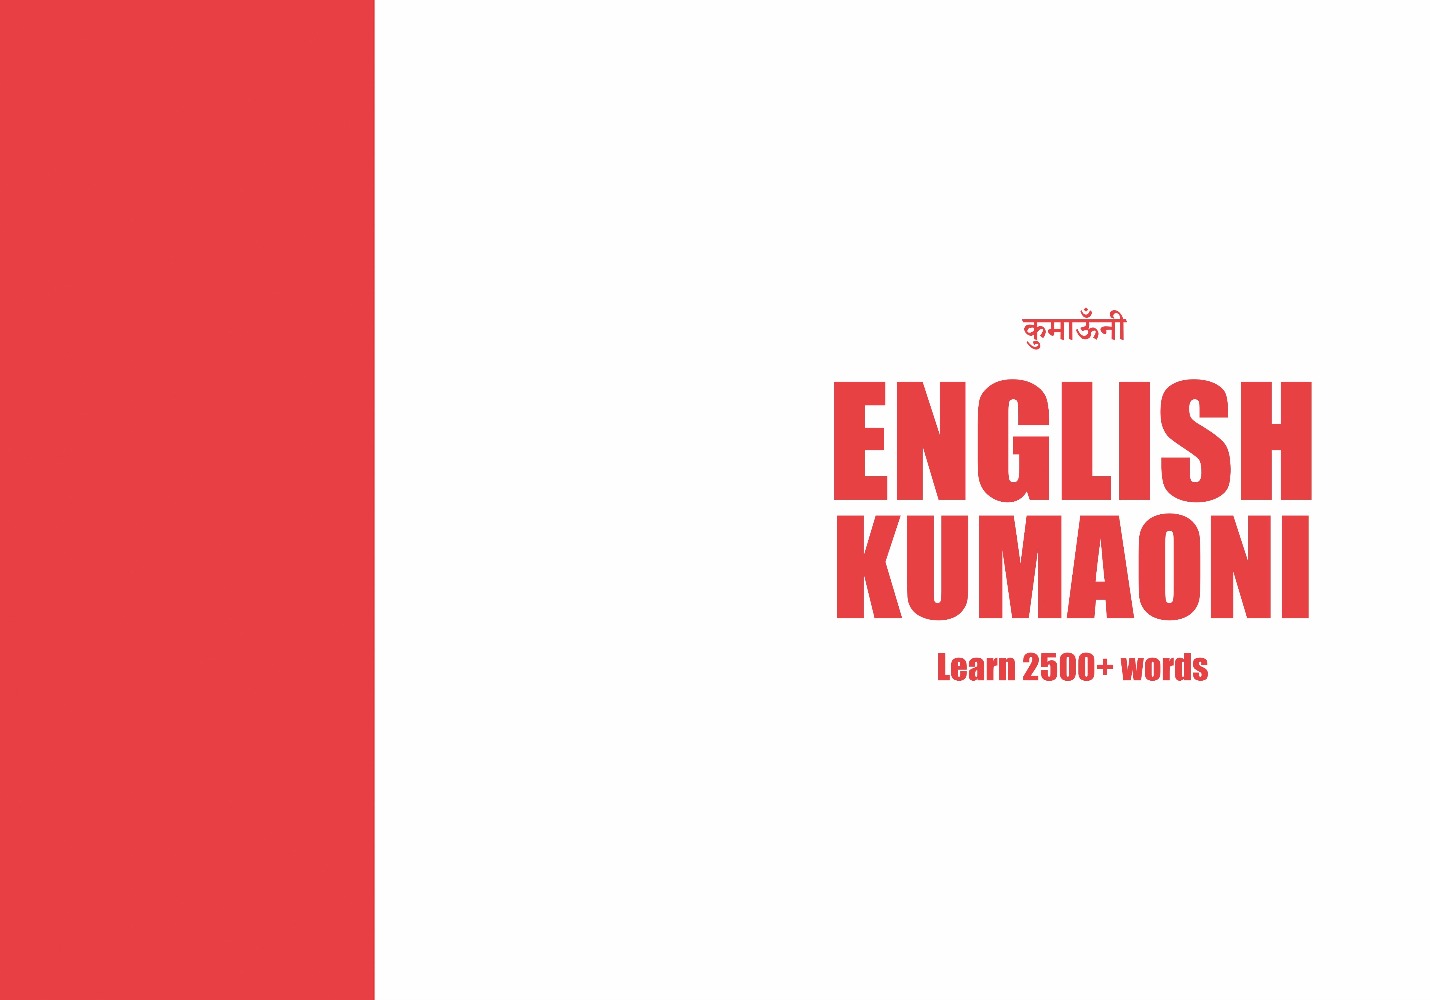 Kumaoni language learning notebook cover